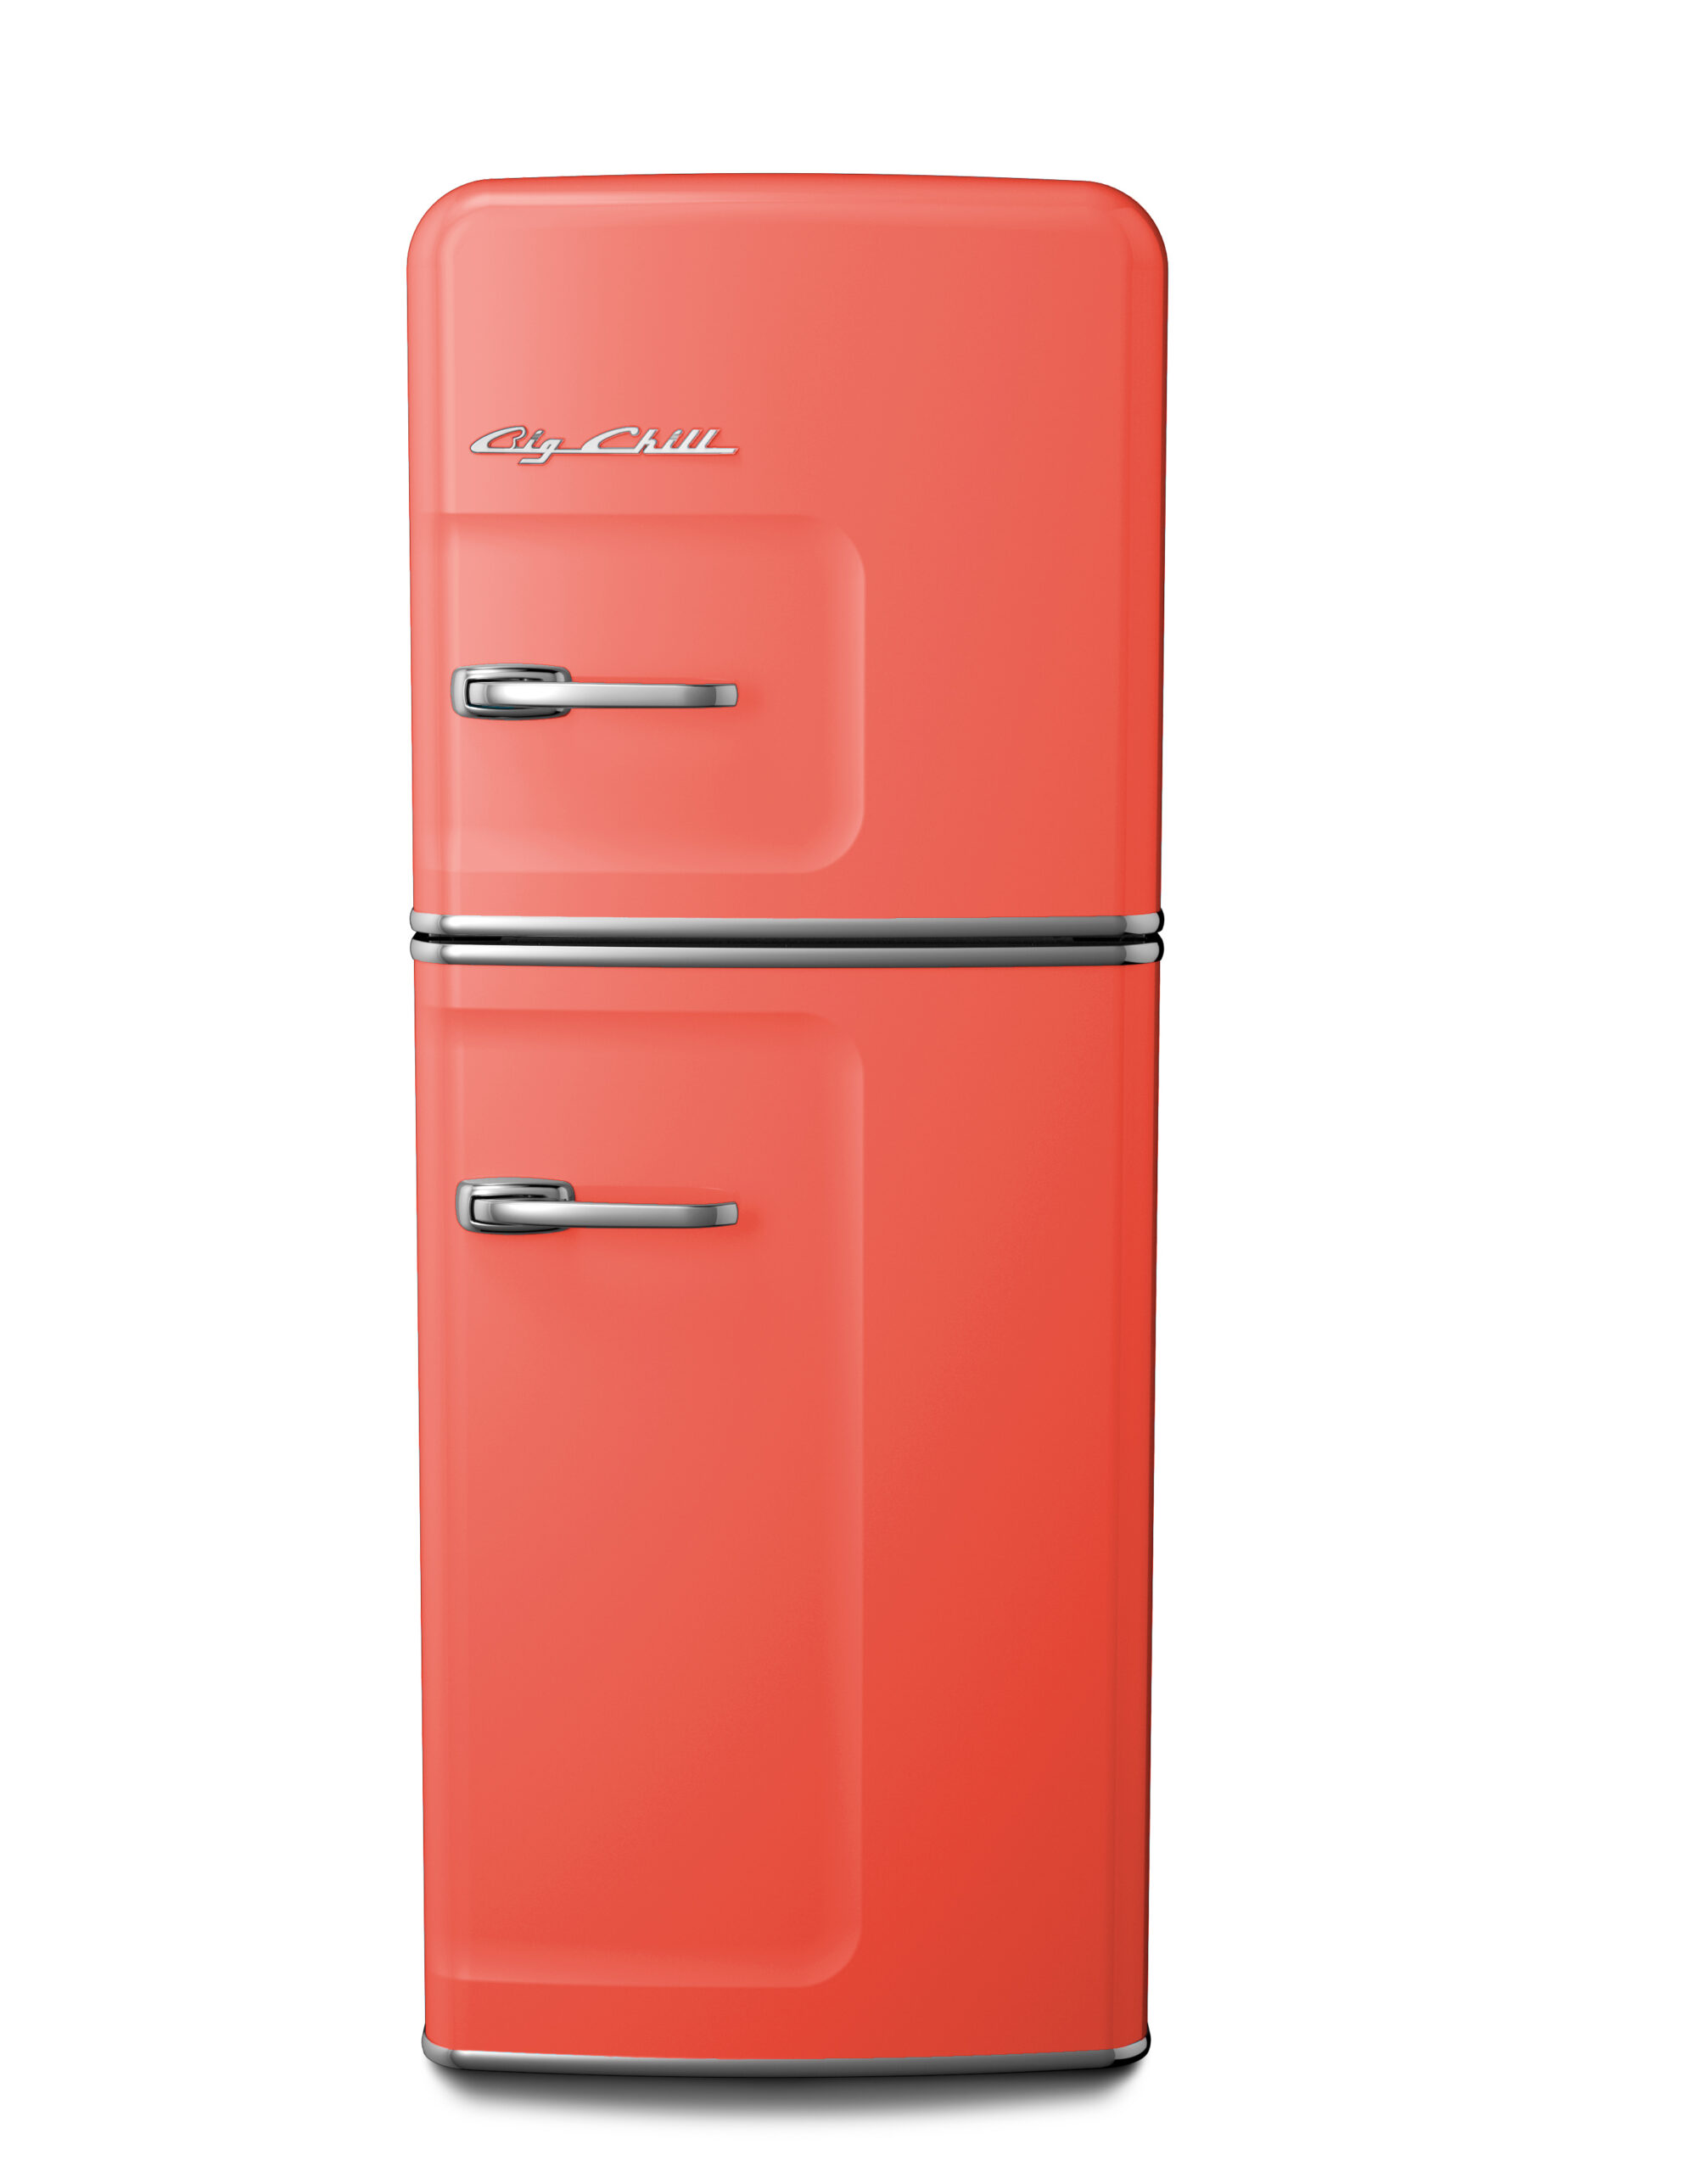 Slim fridge in salmon pink by Big Chill